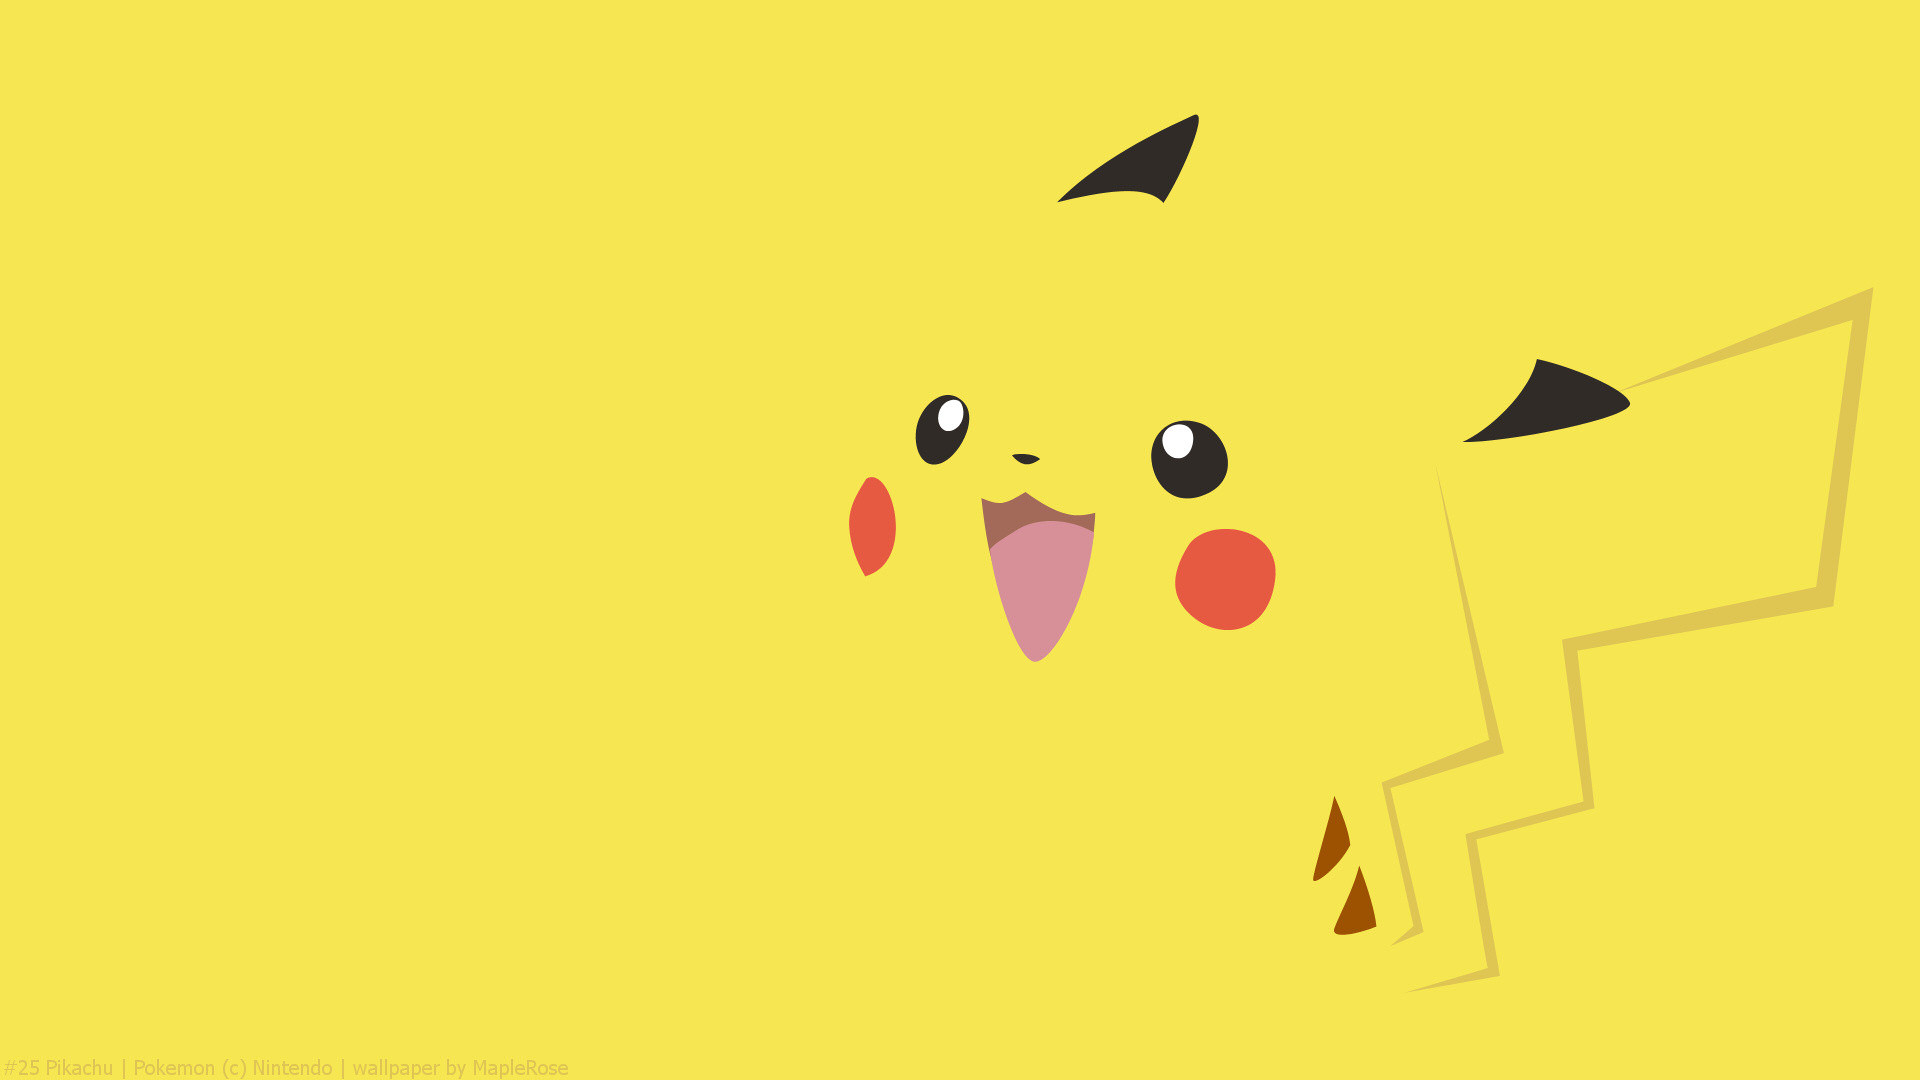 20 Raichu Pokémon HD Wallpapers and Backgrounds